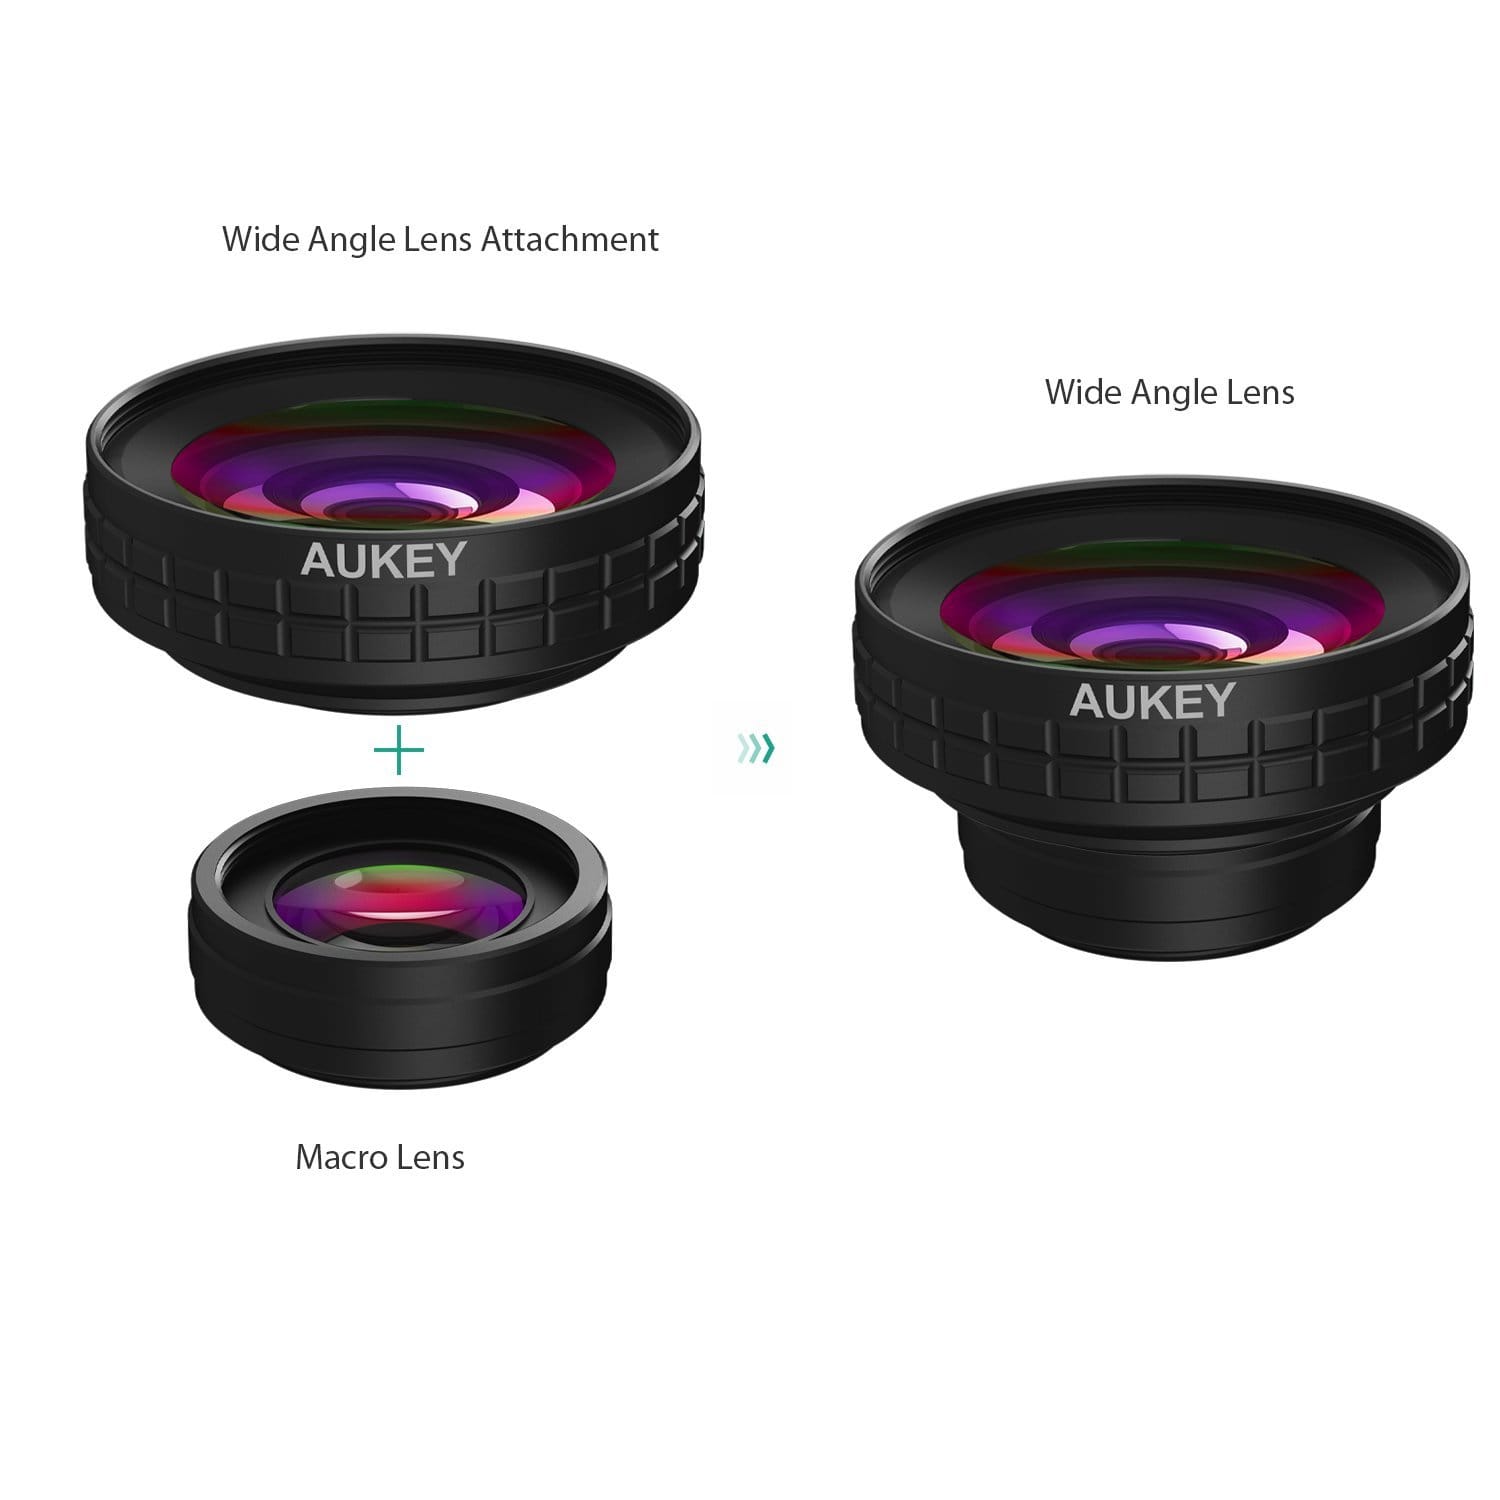 Aukey PL-Wd07 lens info [center]